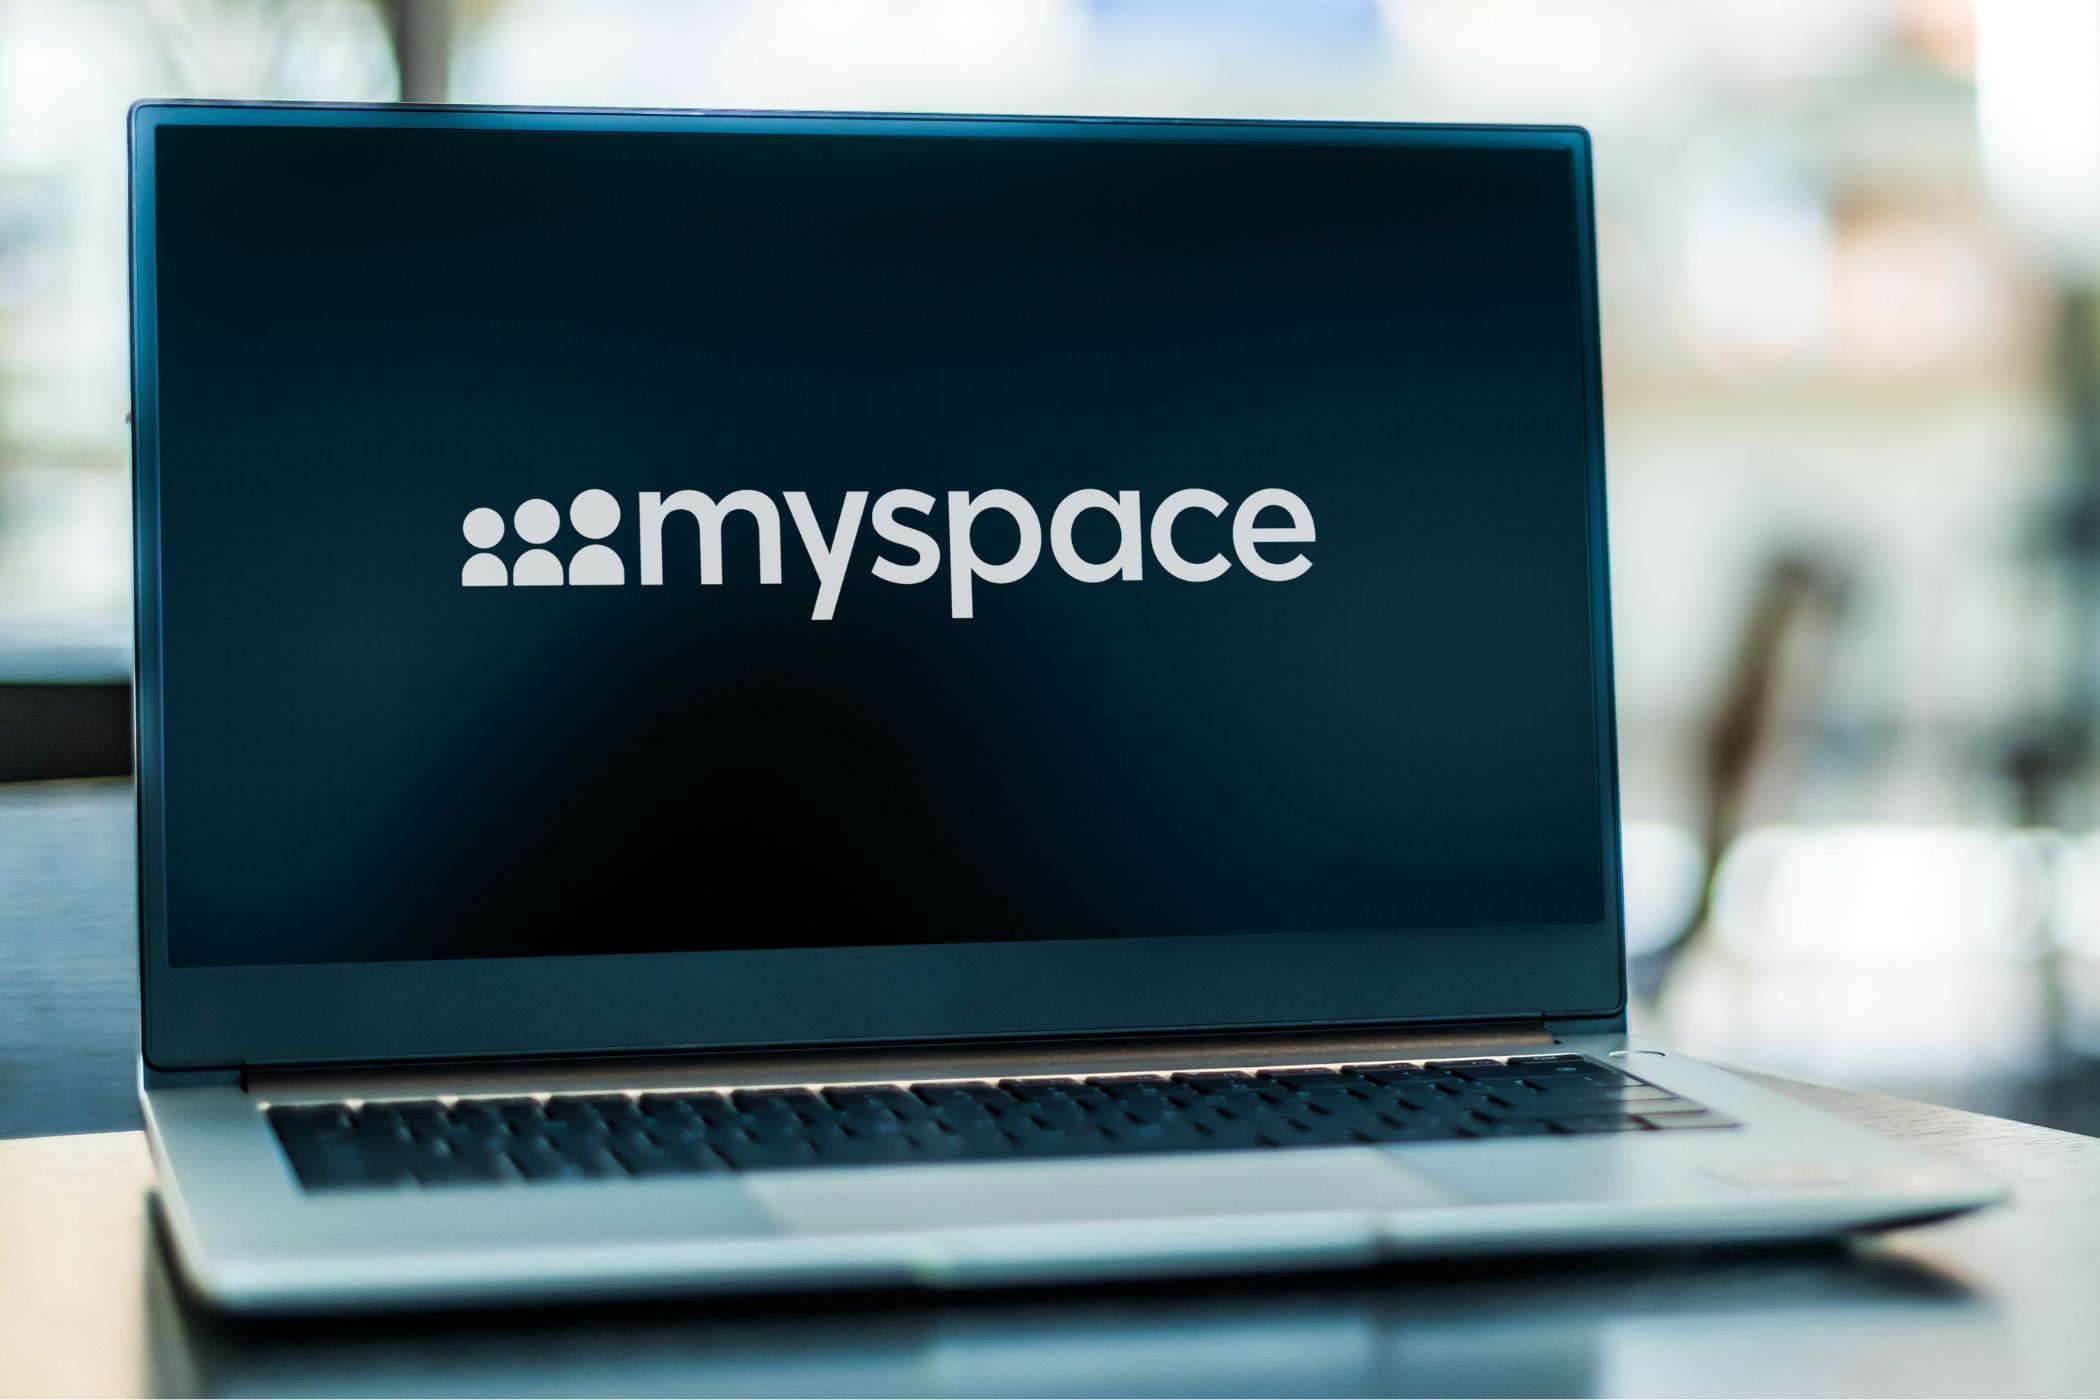 myspace logo on a laptop